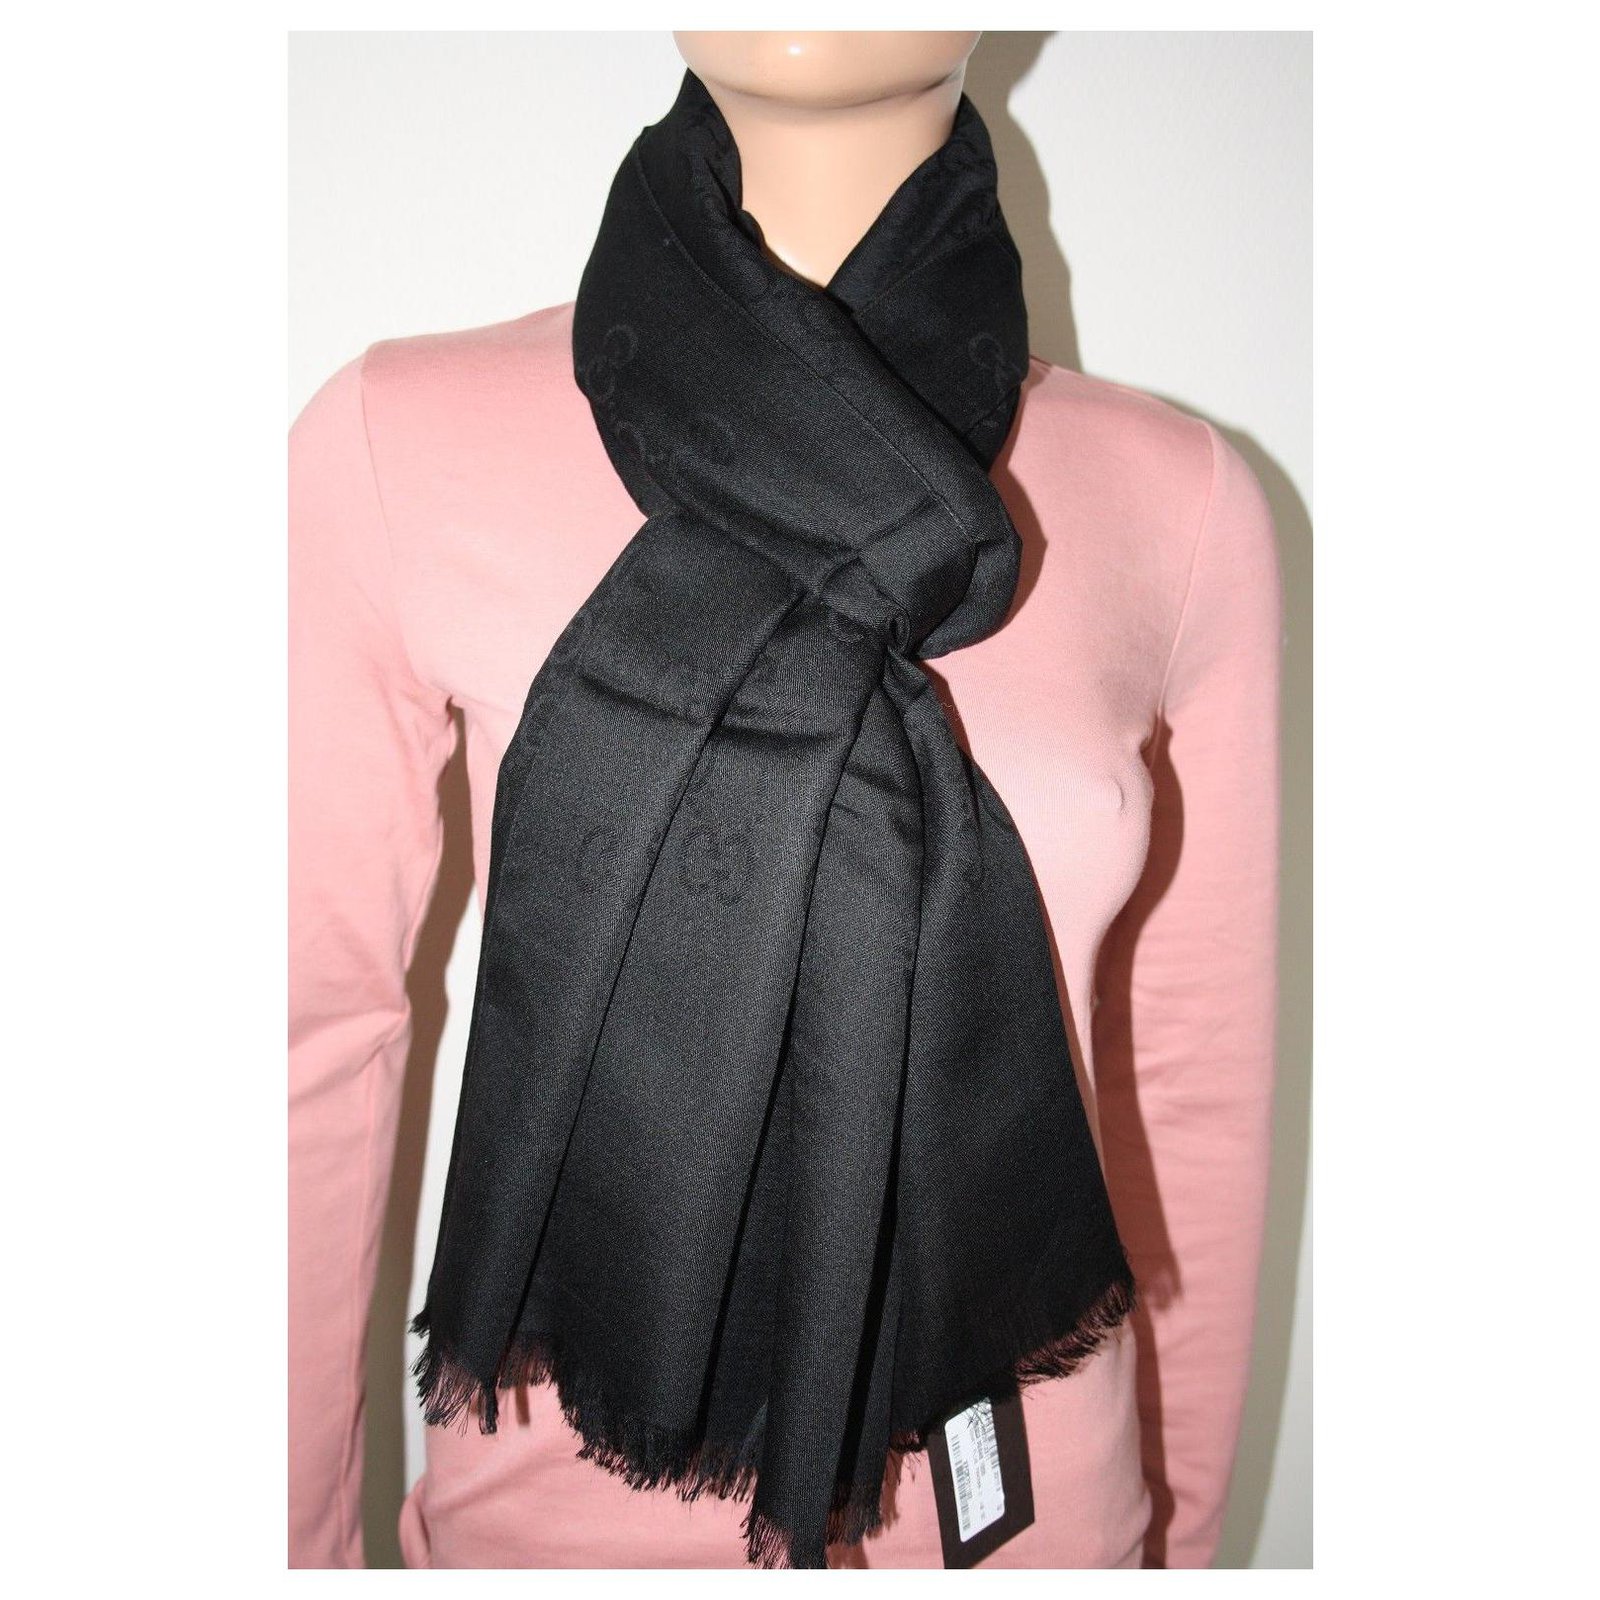 gucci shawl black